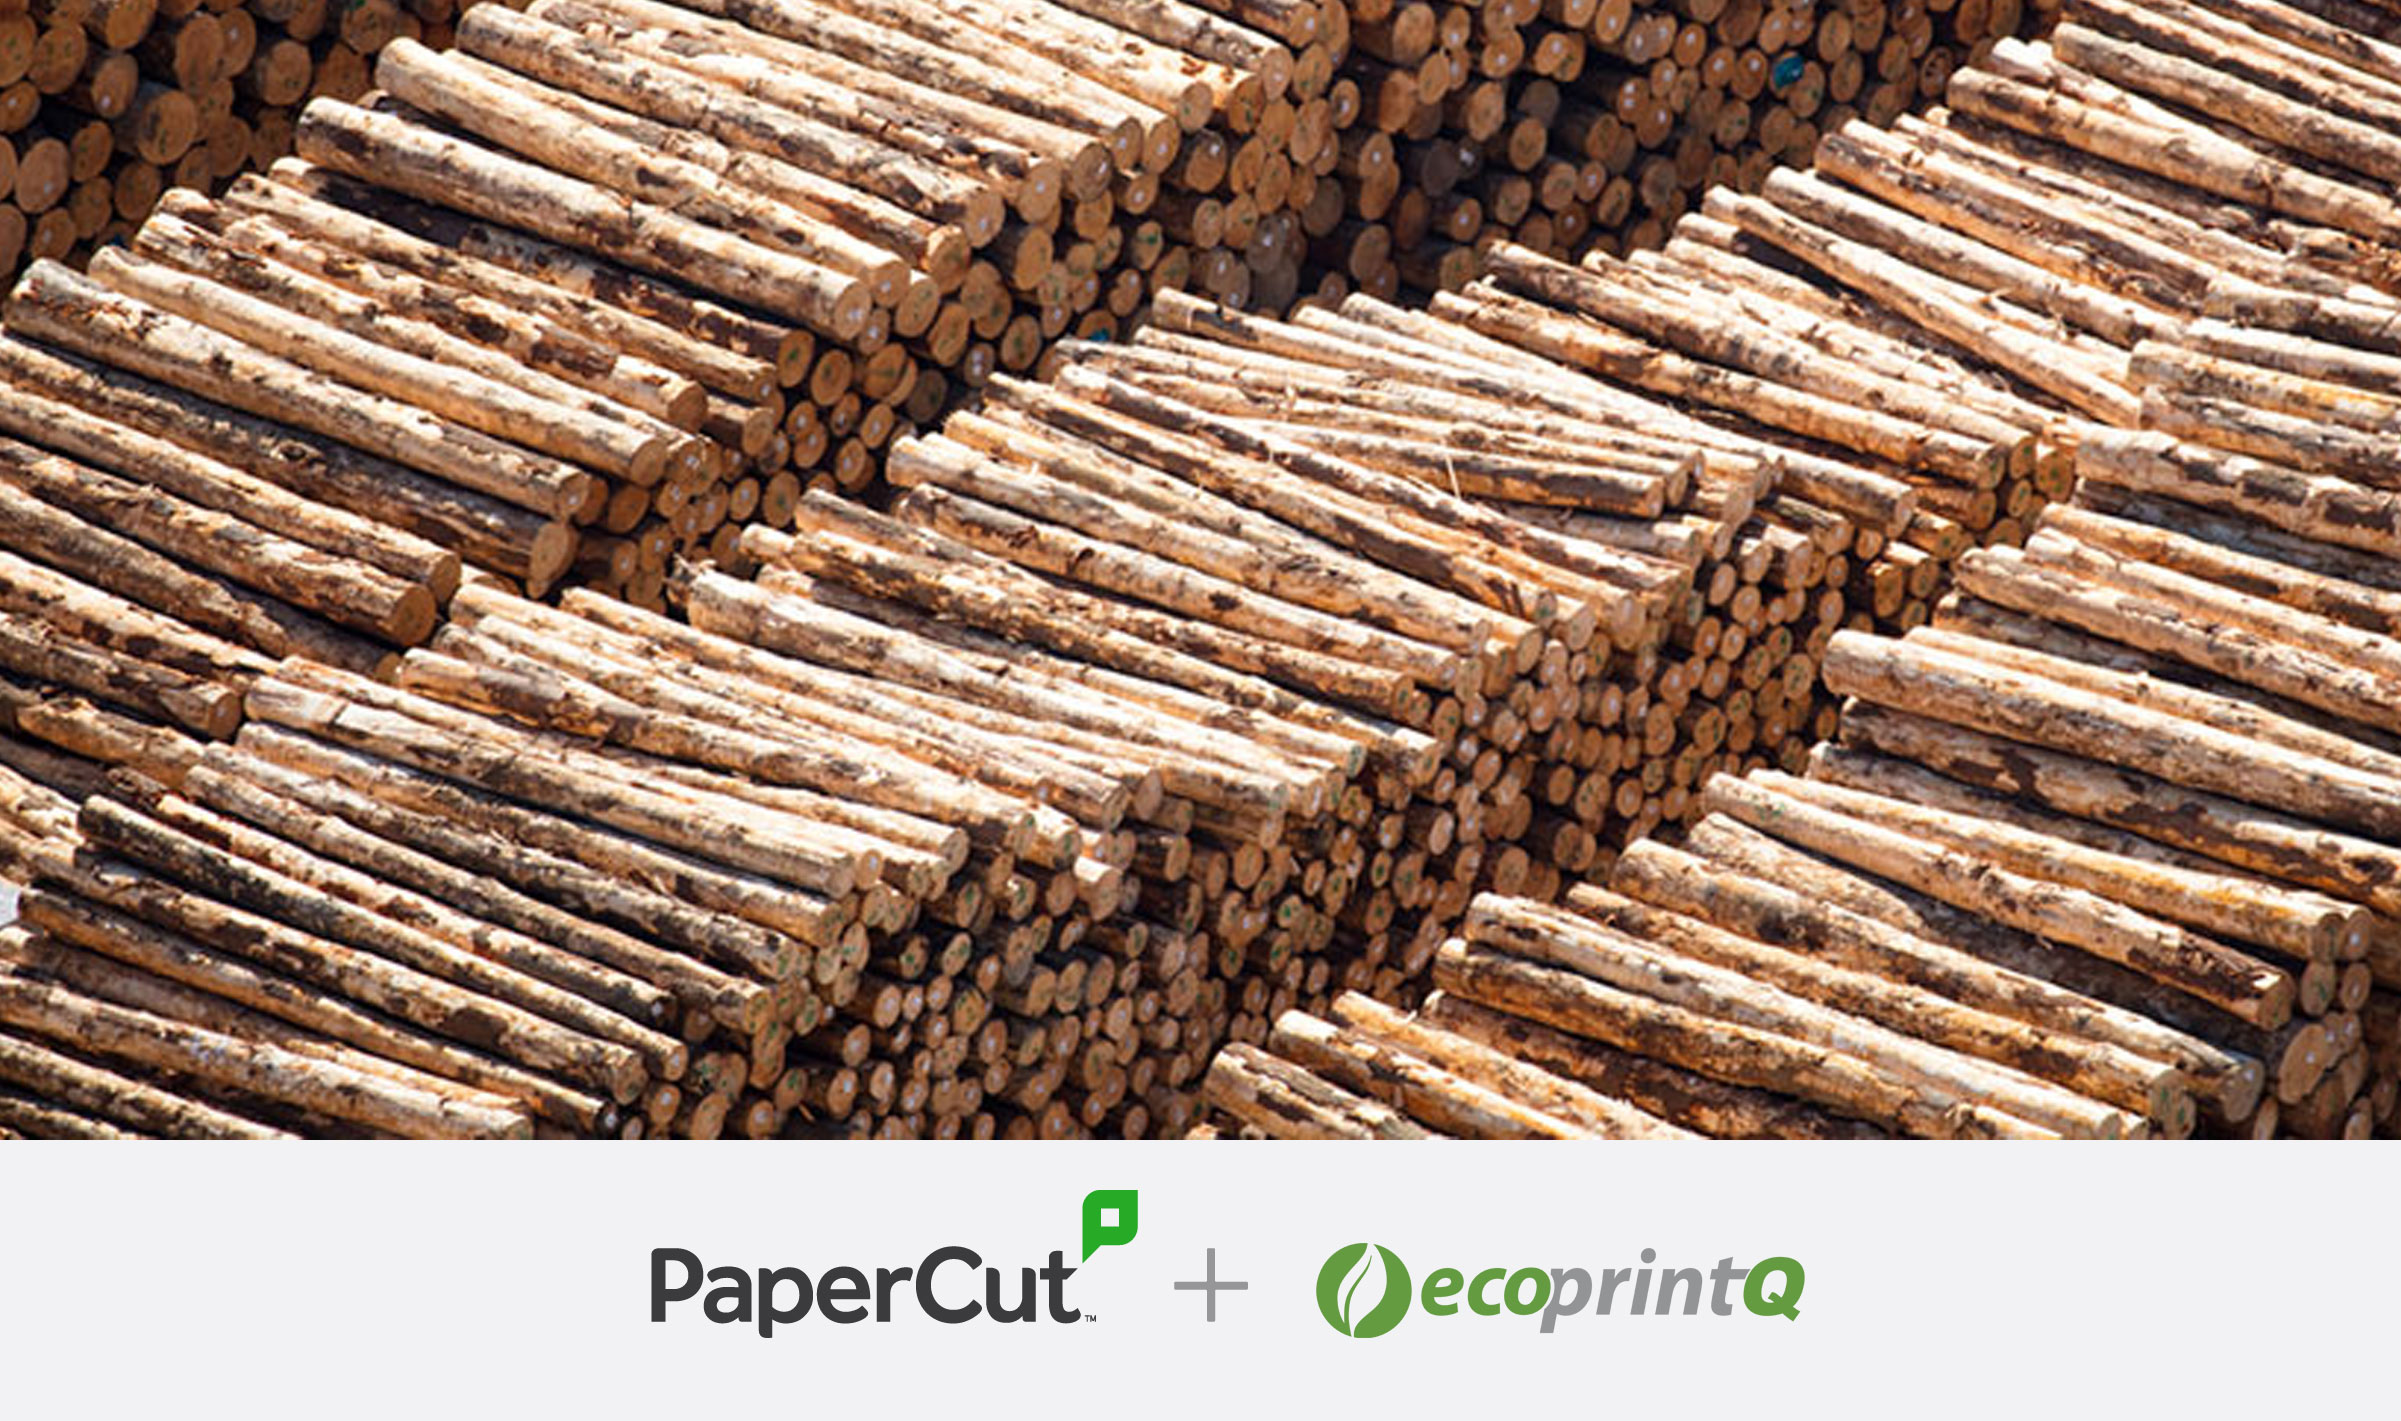 ecoprintQ PaperCut Save Tress